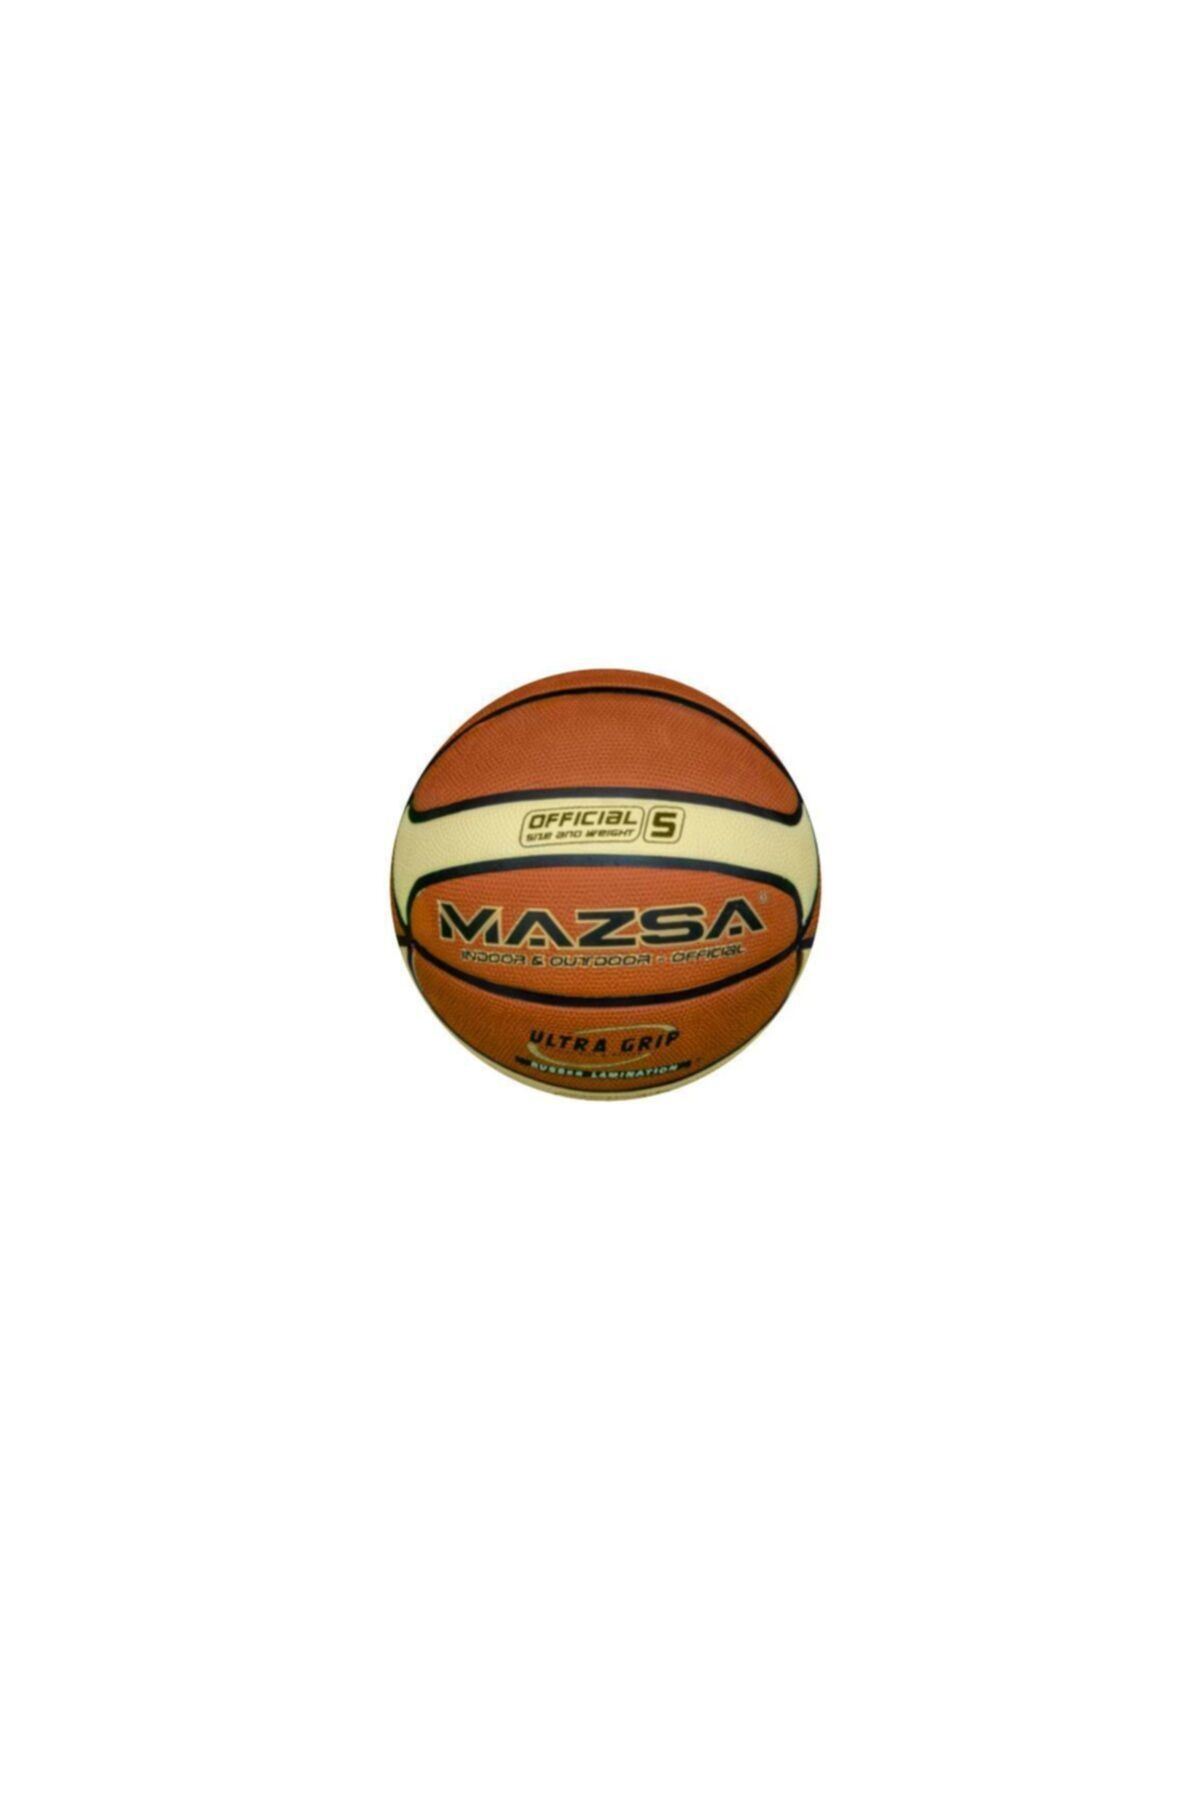 Ekip Spor Mazsa Kauçuk Tabanlı 5 No Basketbol Topu